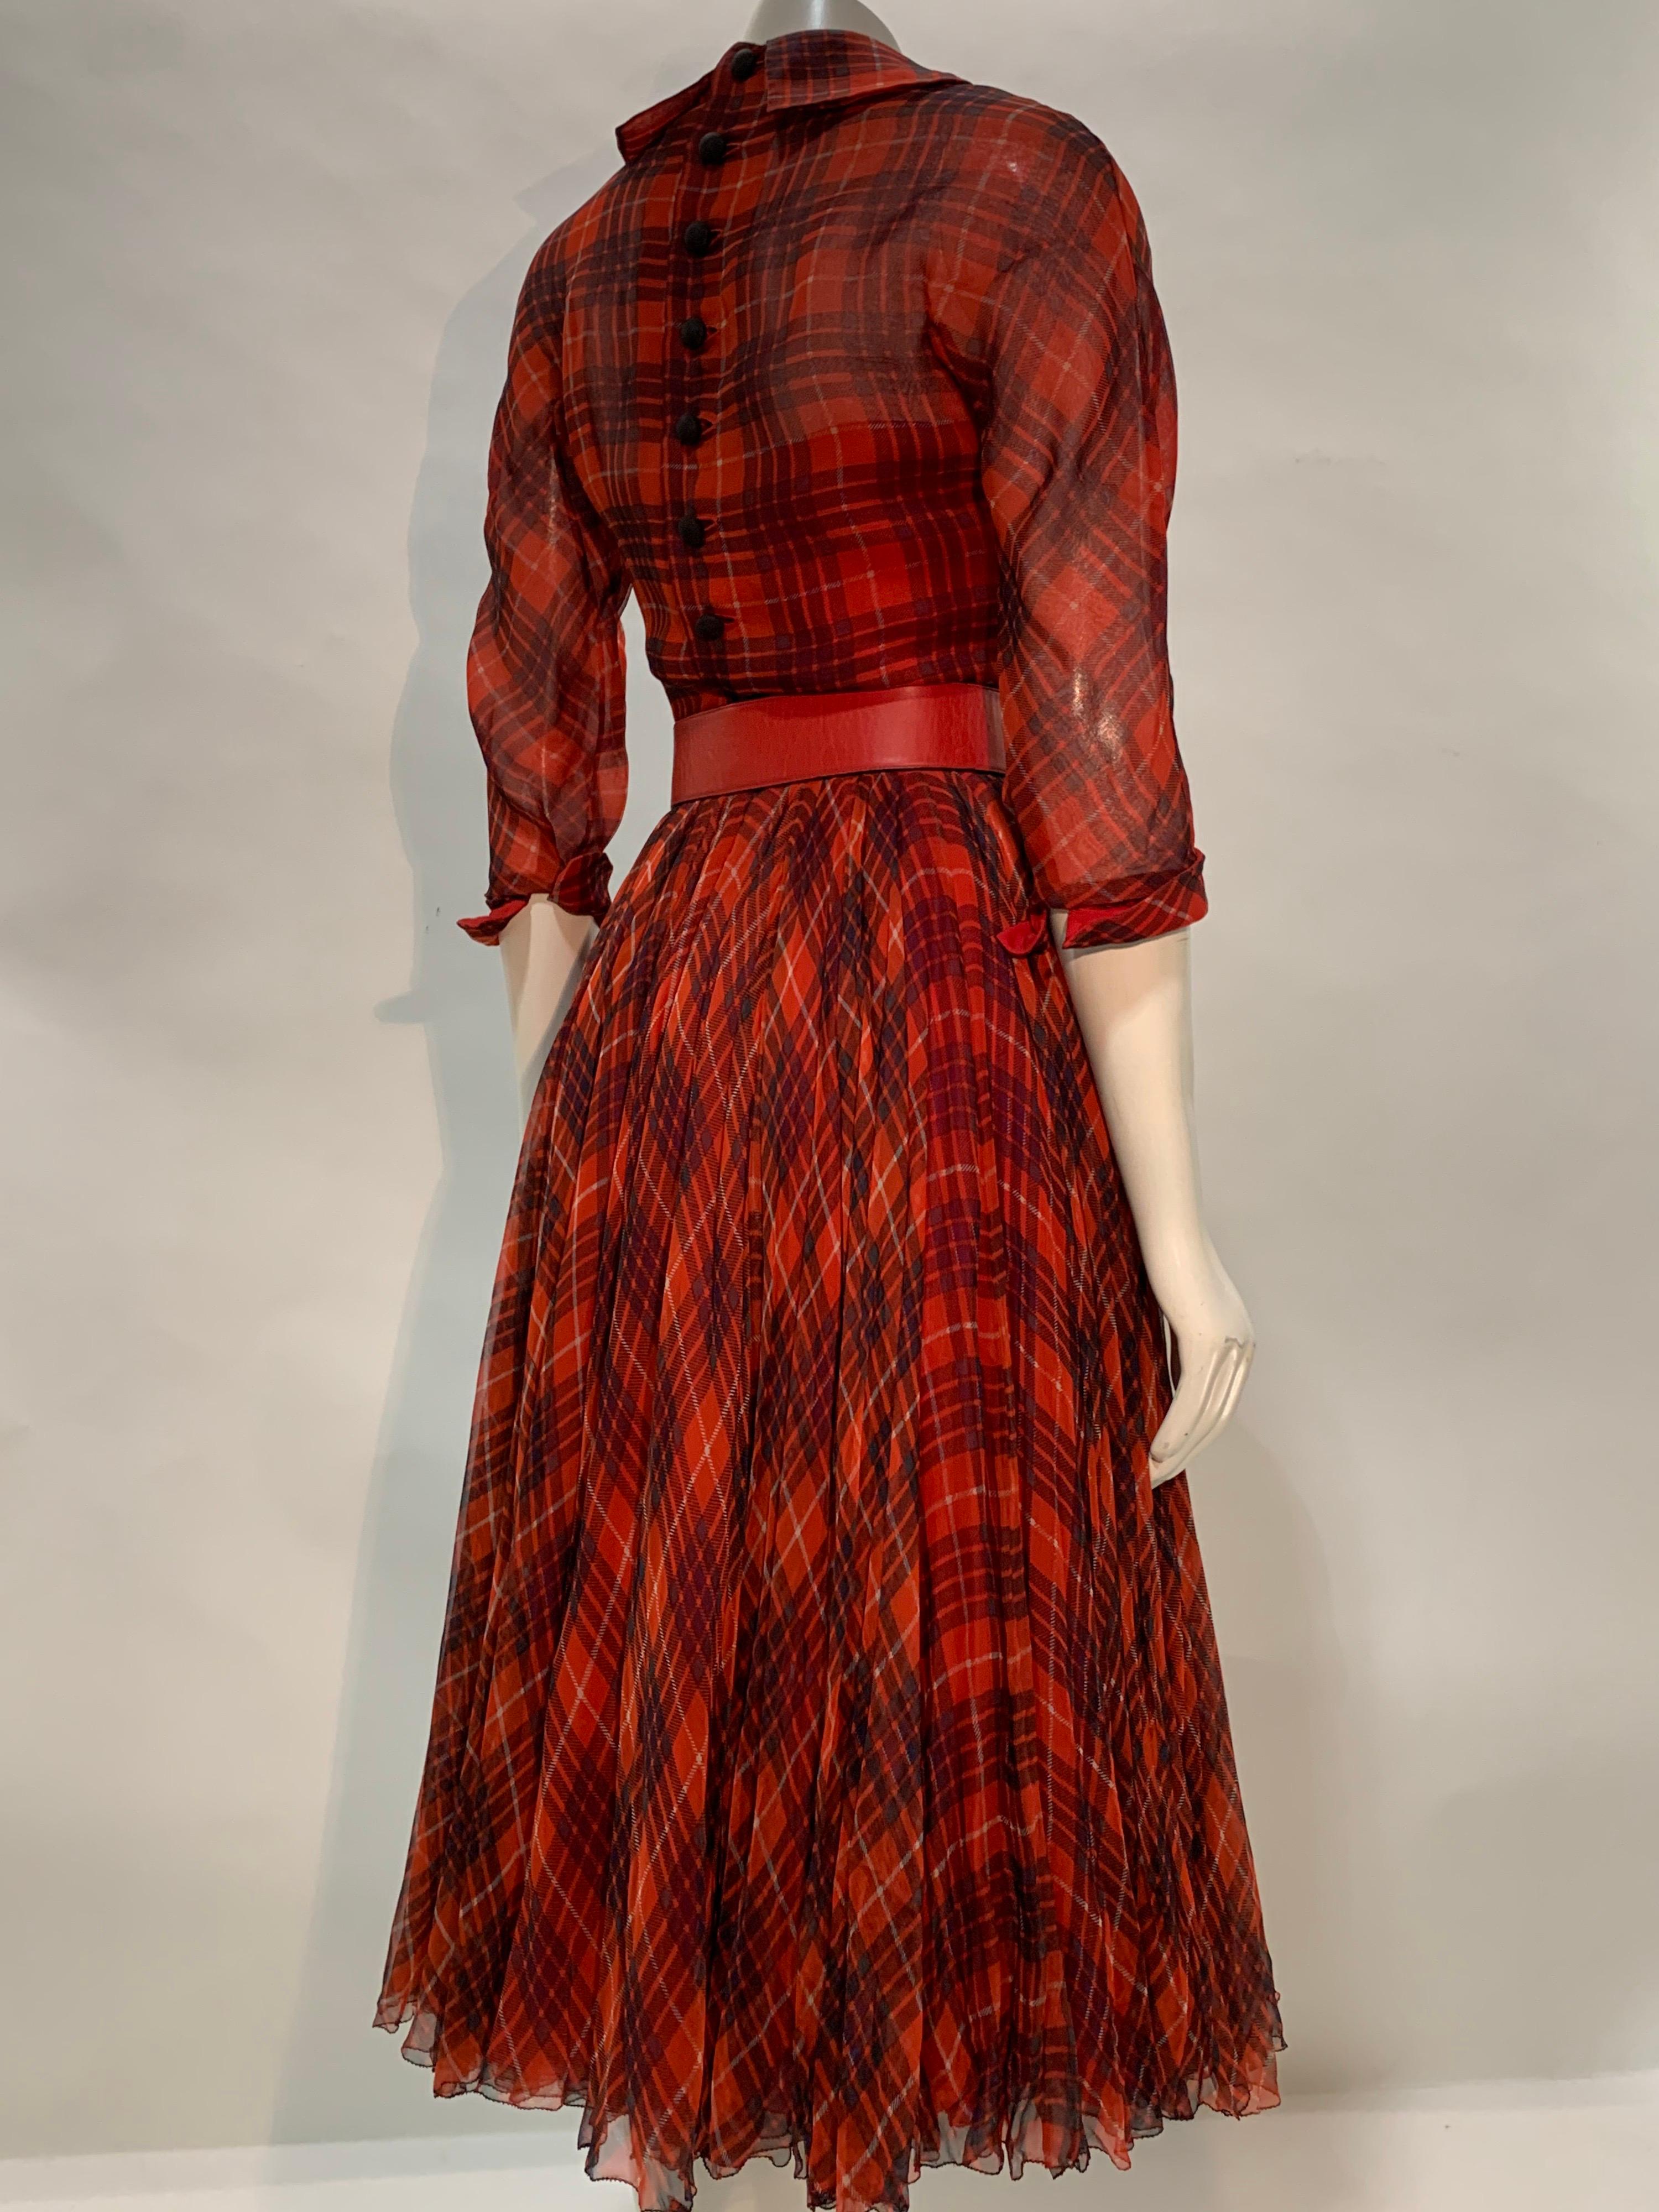 1950 James Galanos Red & Black Plaid Silk Chiffon Dress w/ Structured Under-Bust For Sale 2